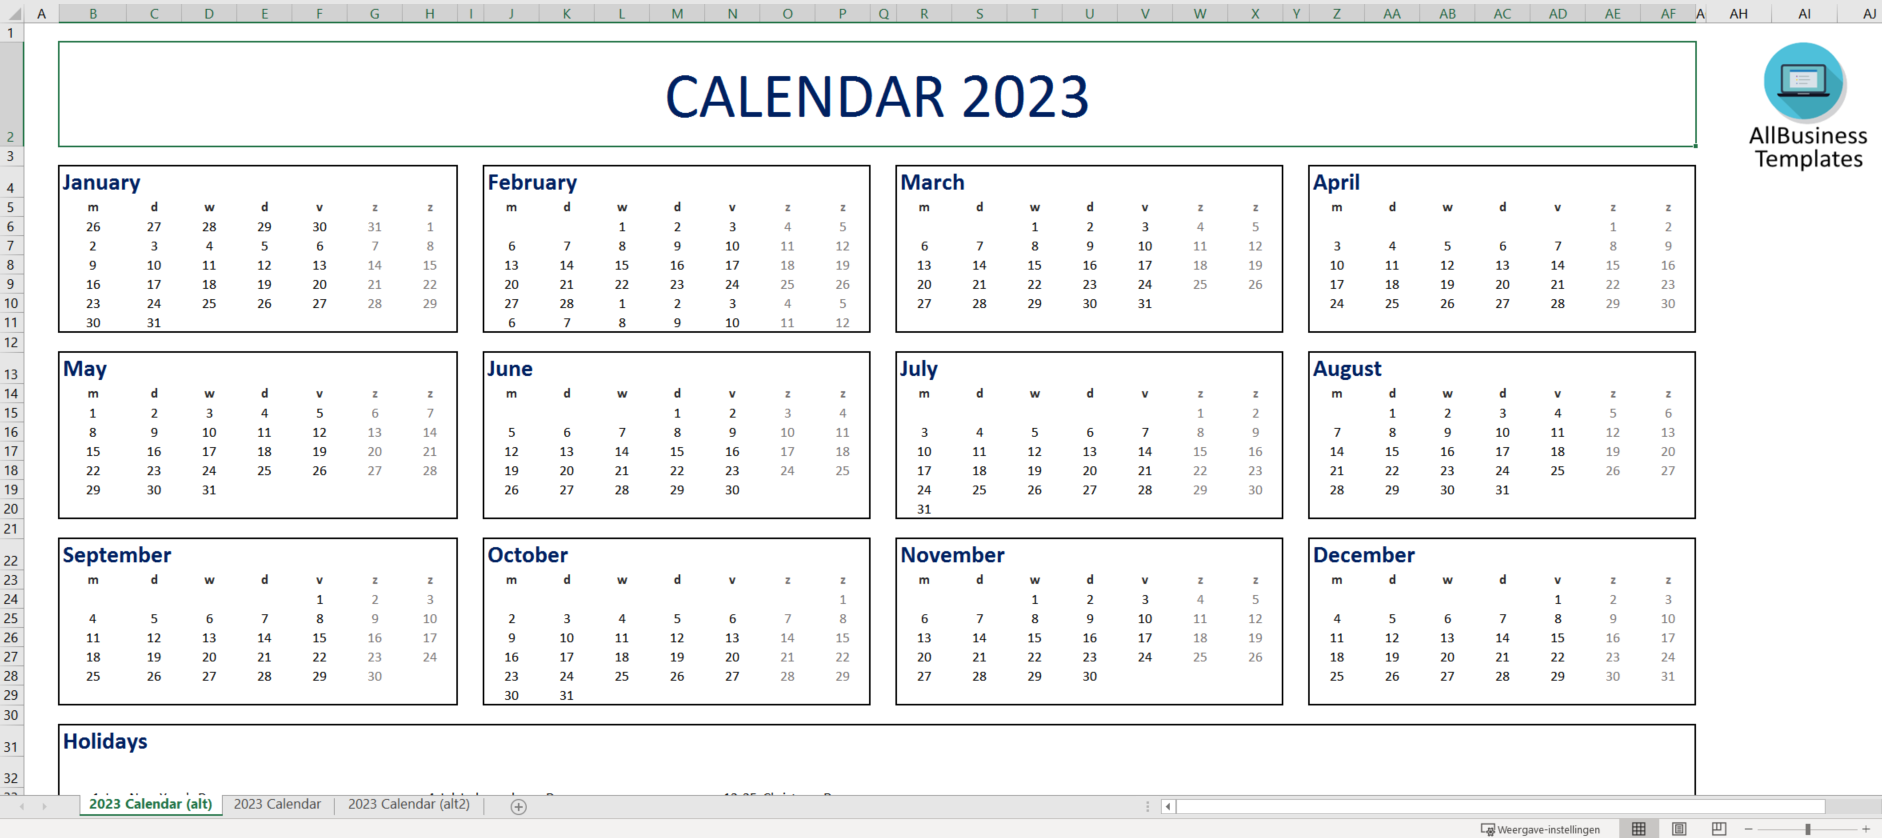 calendar 2023 excel template